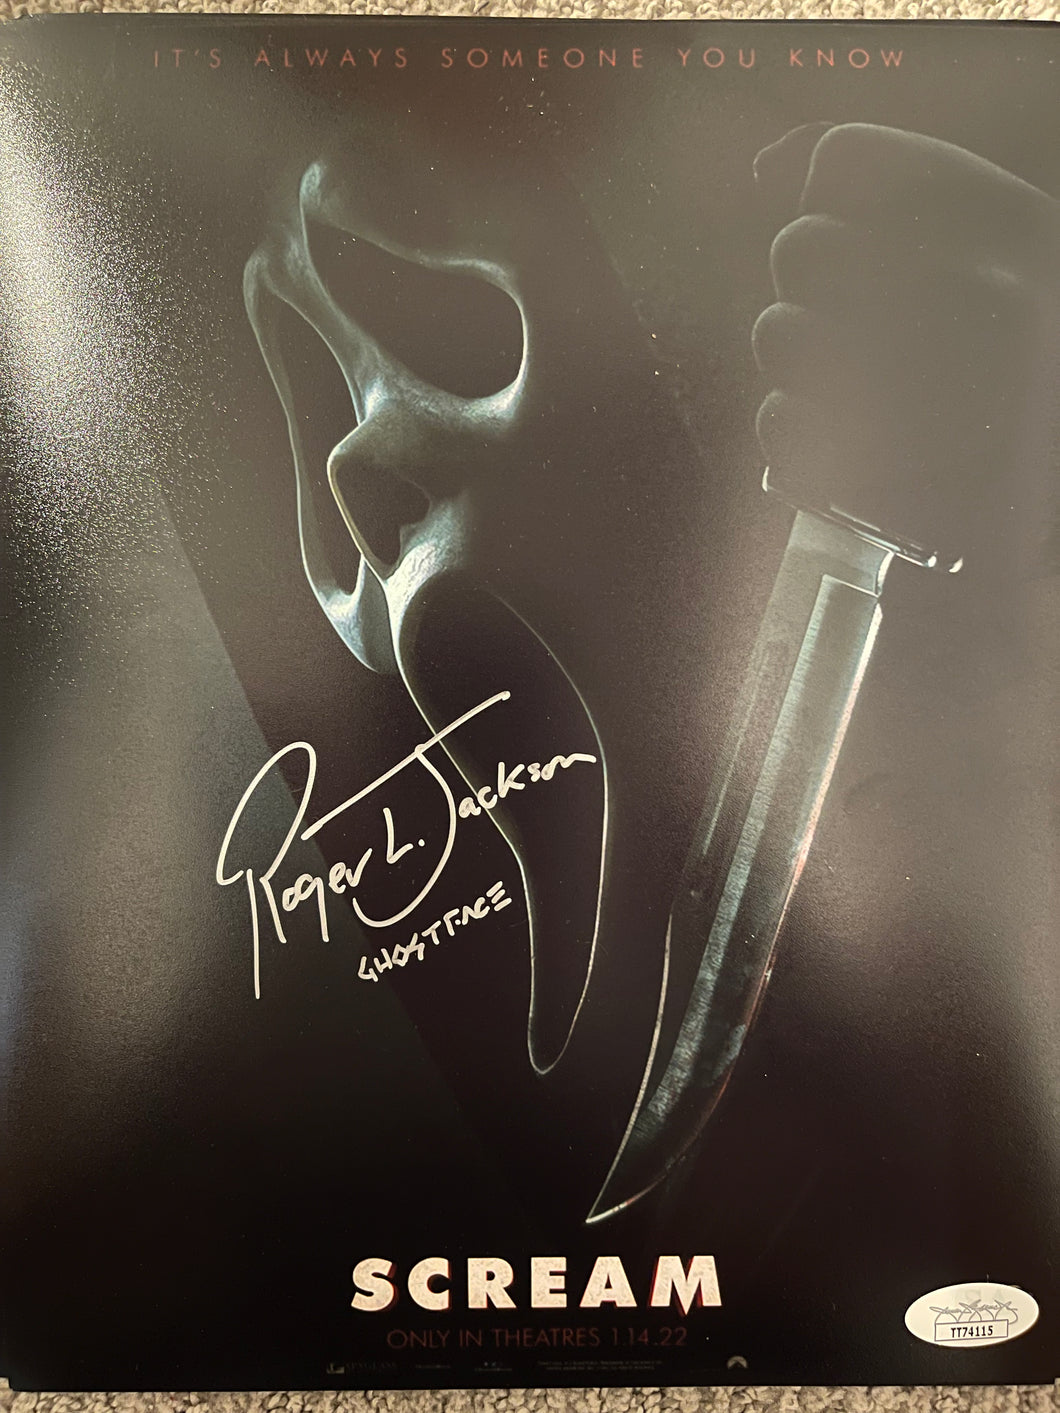 Scream Roger Jackson signed Ghostface 8x10 JSA COA